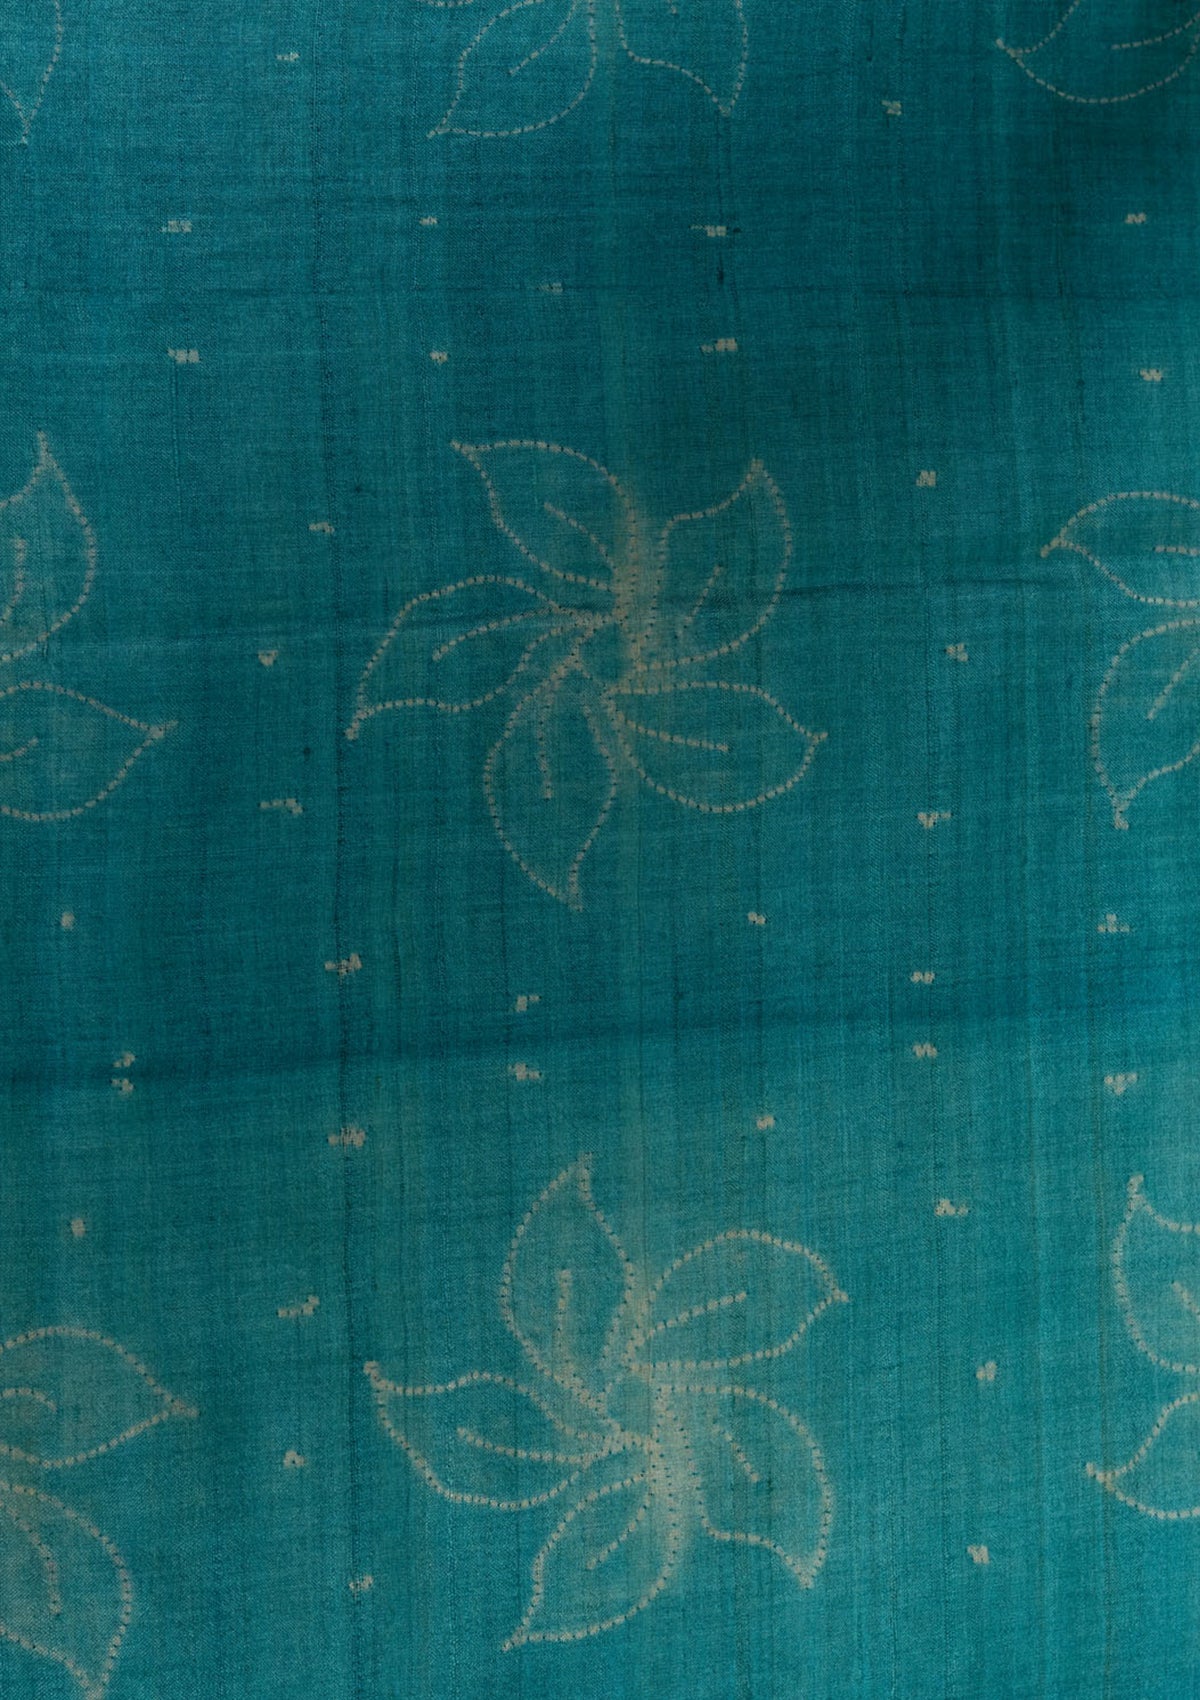 Handwoven Cerulean Blue Shibori Fabric